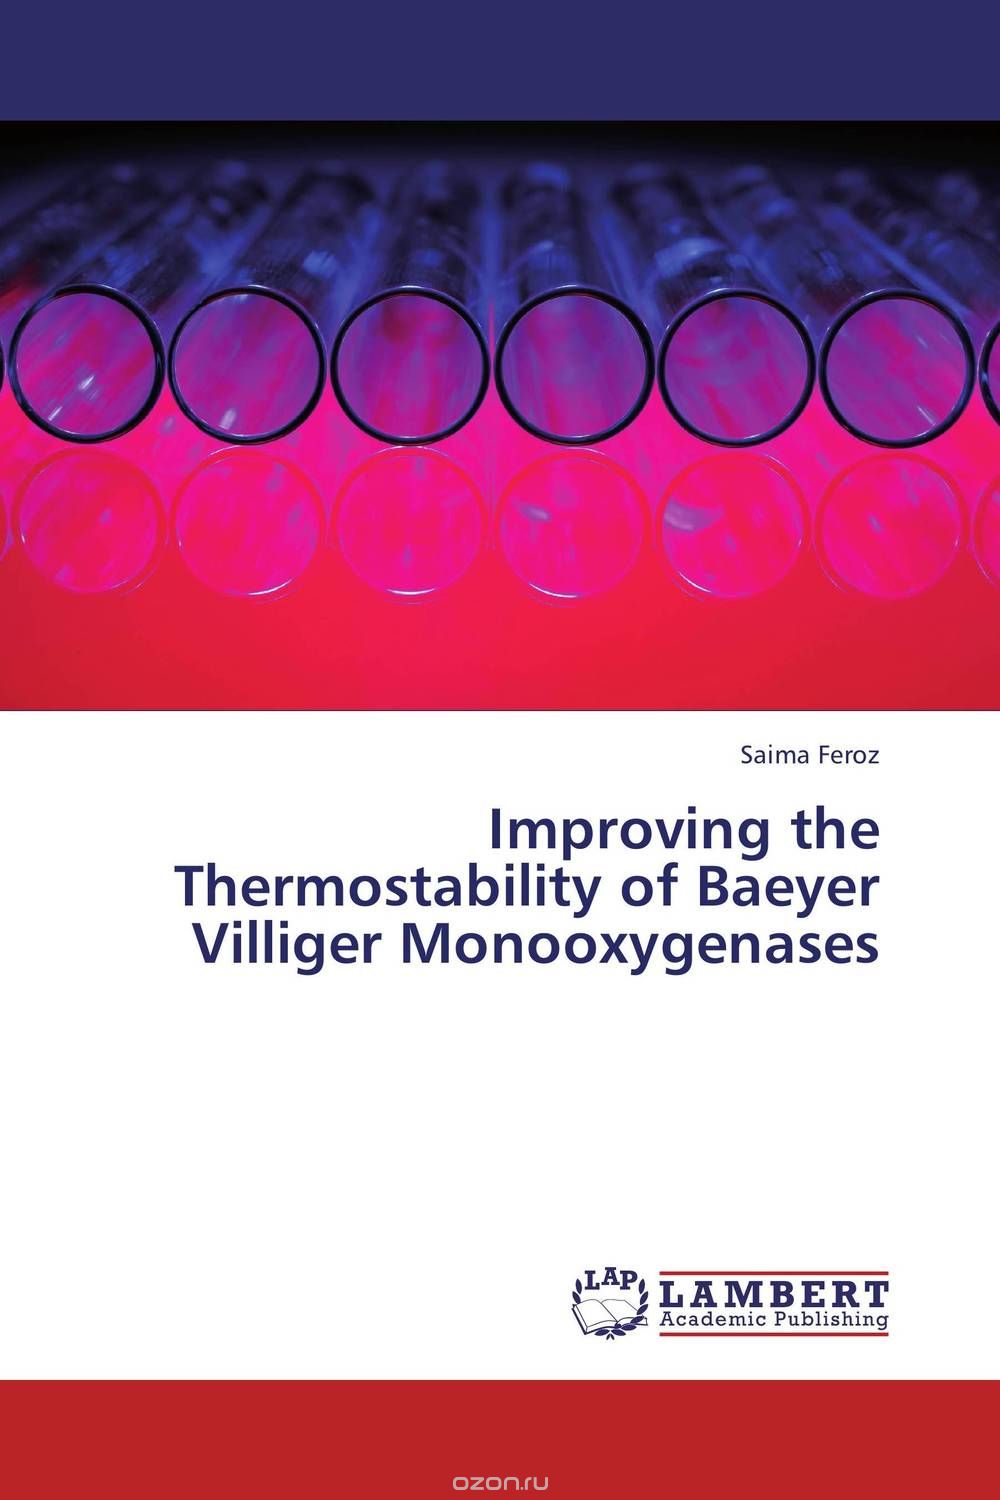 Скачать книгу "Improving the Thermostability of Baeyer Villiger Monooxygenases"